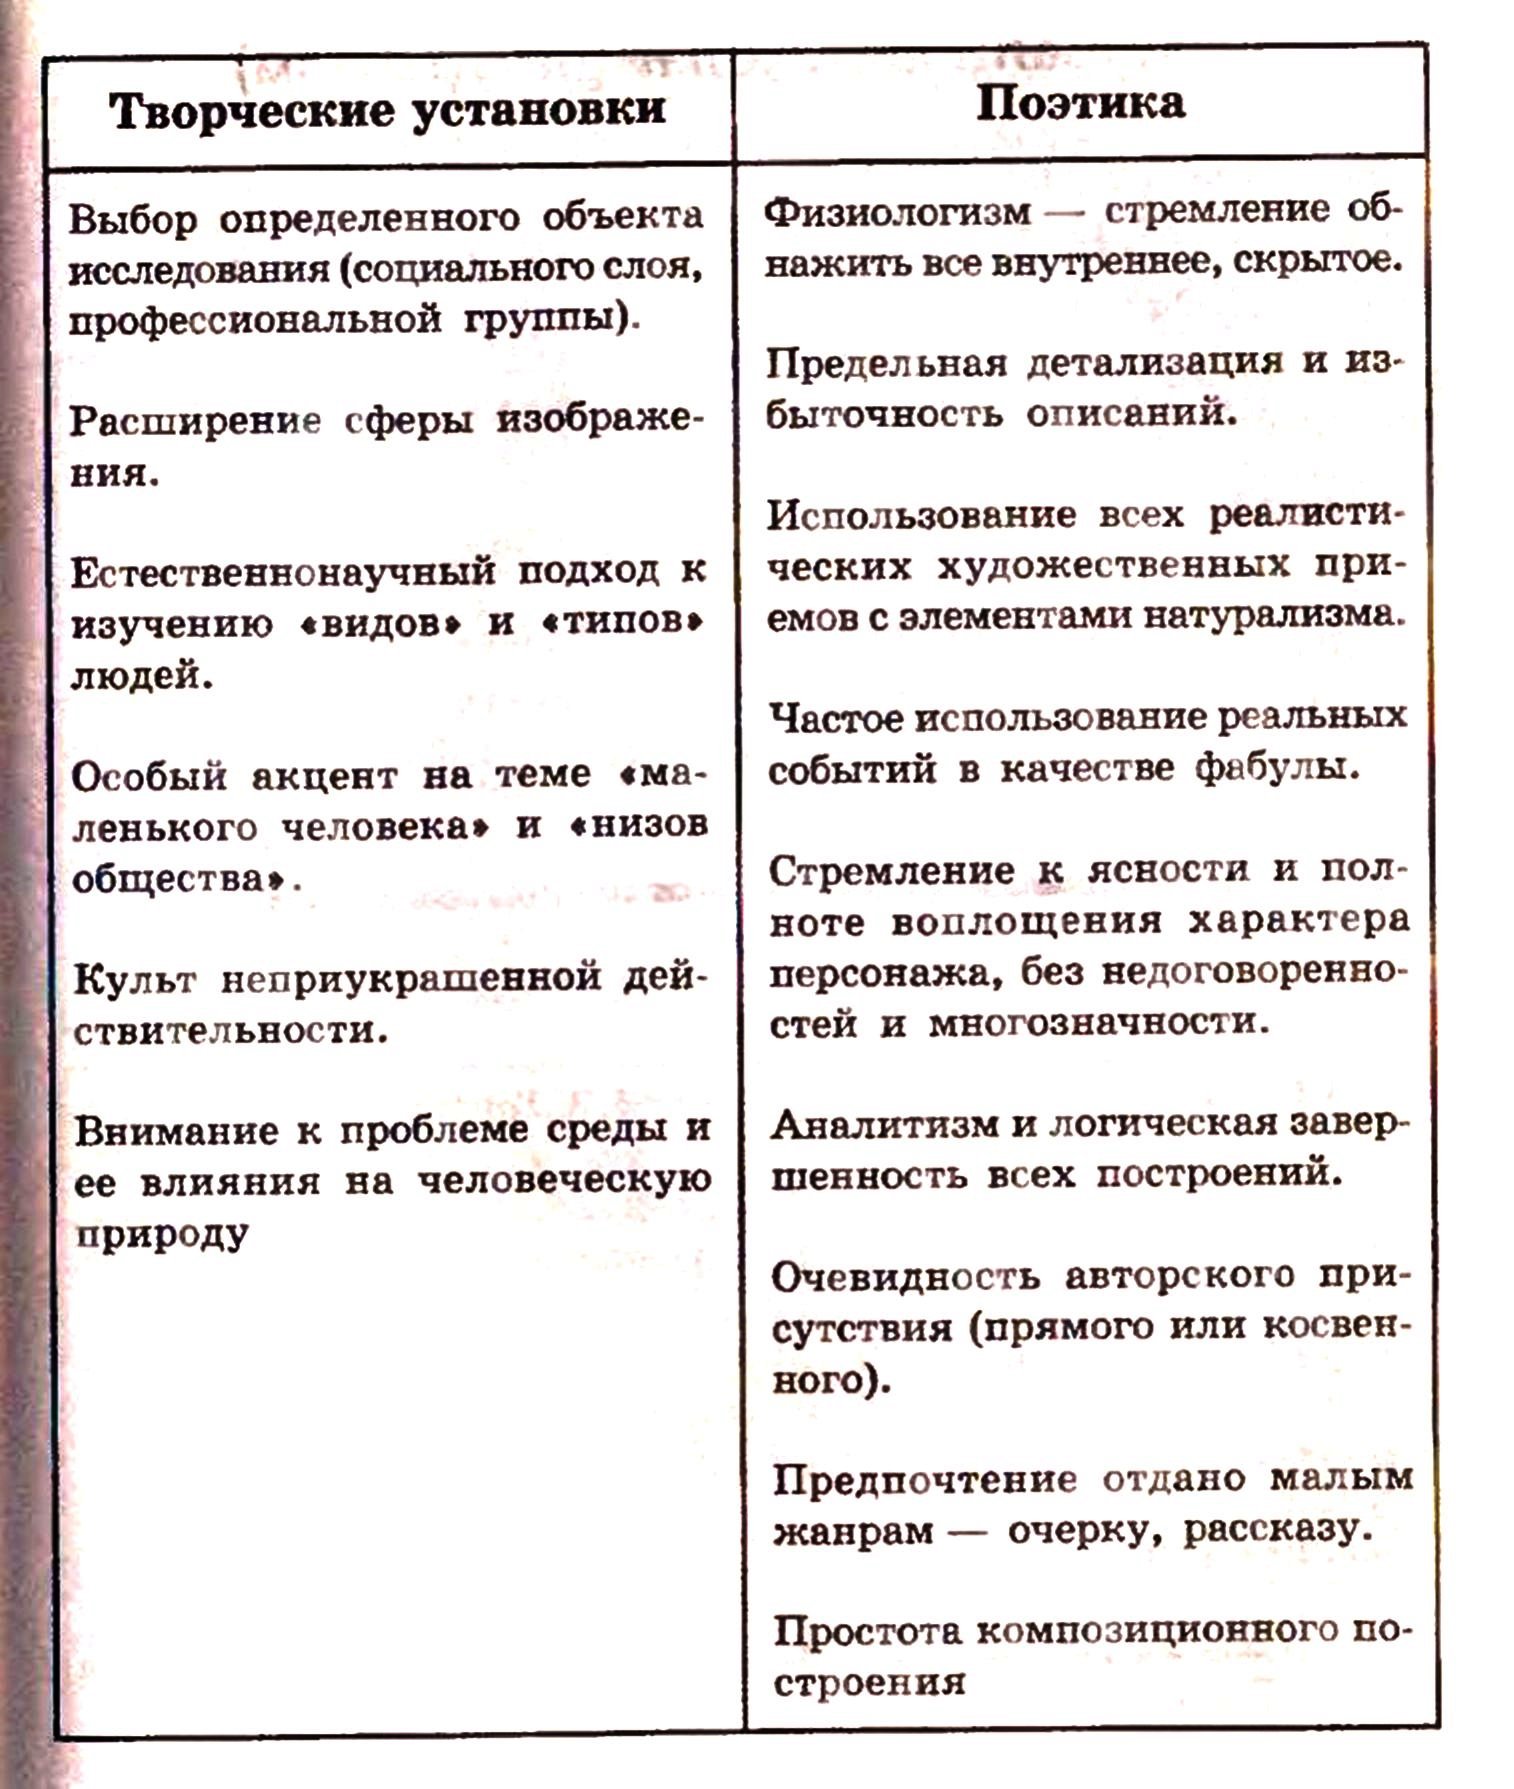 Русский реалистический роман XIX в. название романов